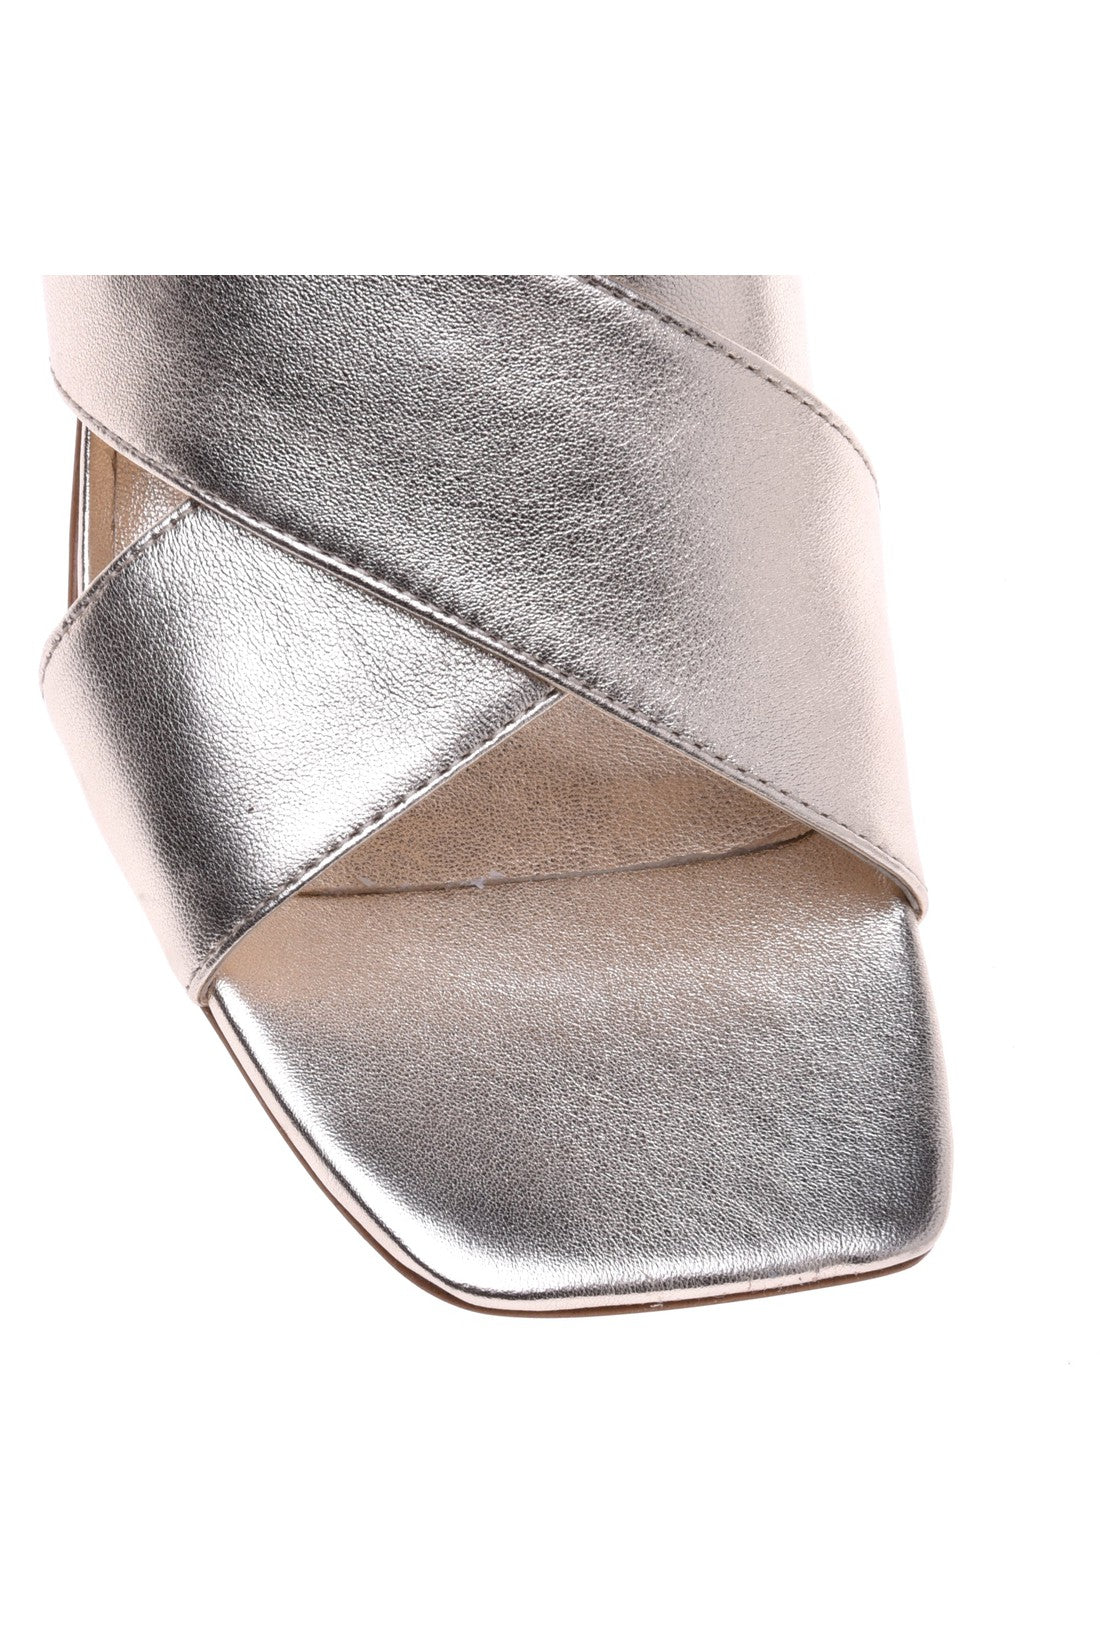 Sandal in laminated platinum nappa leather